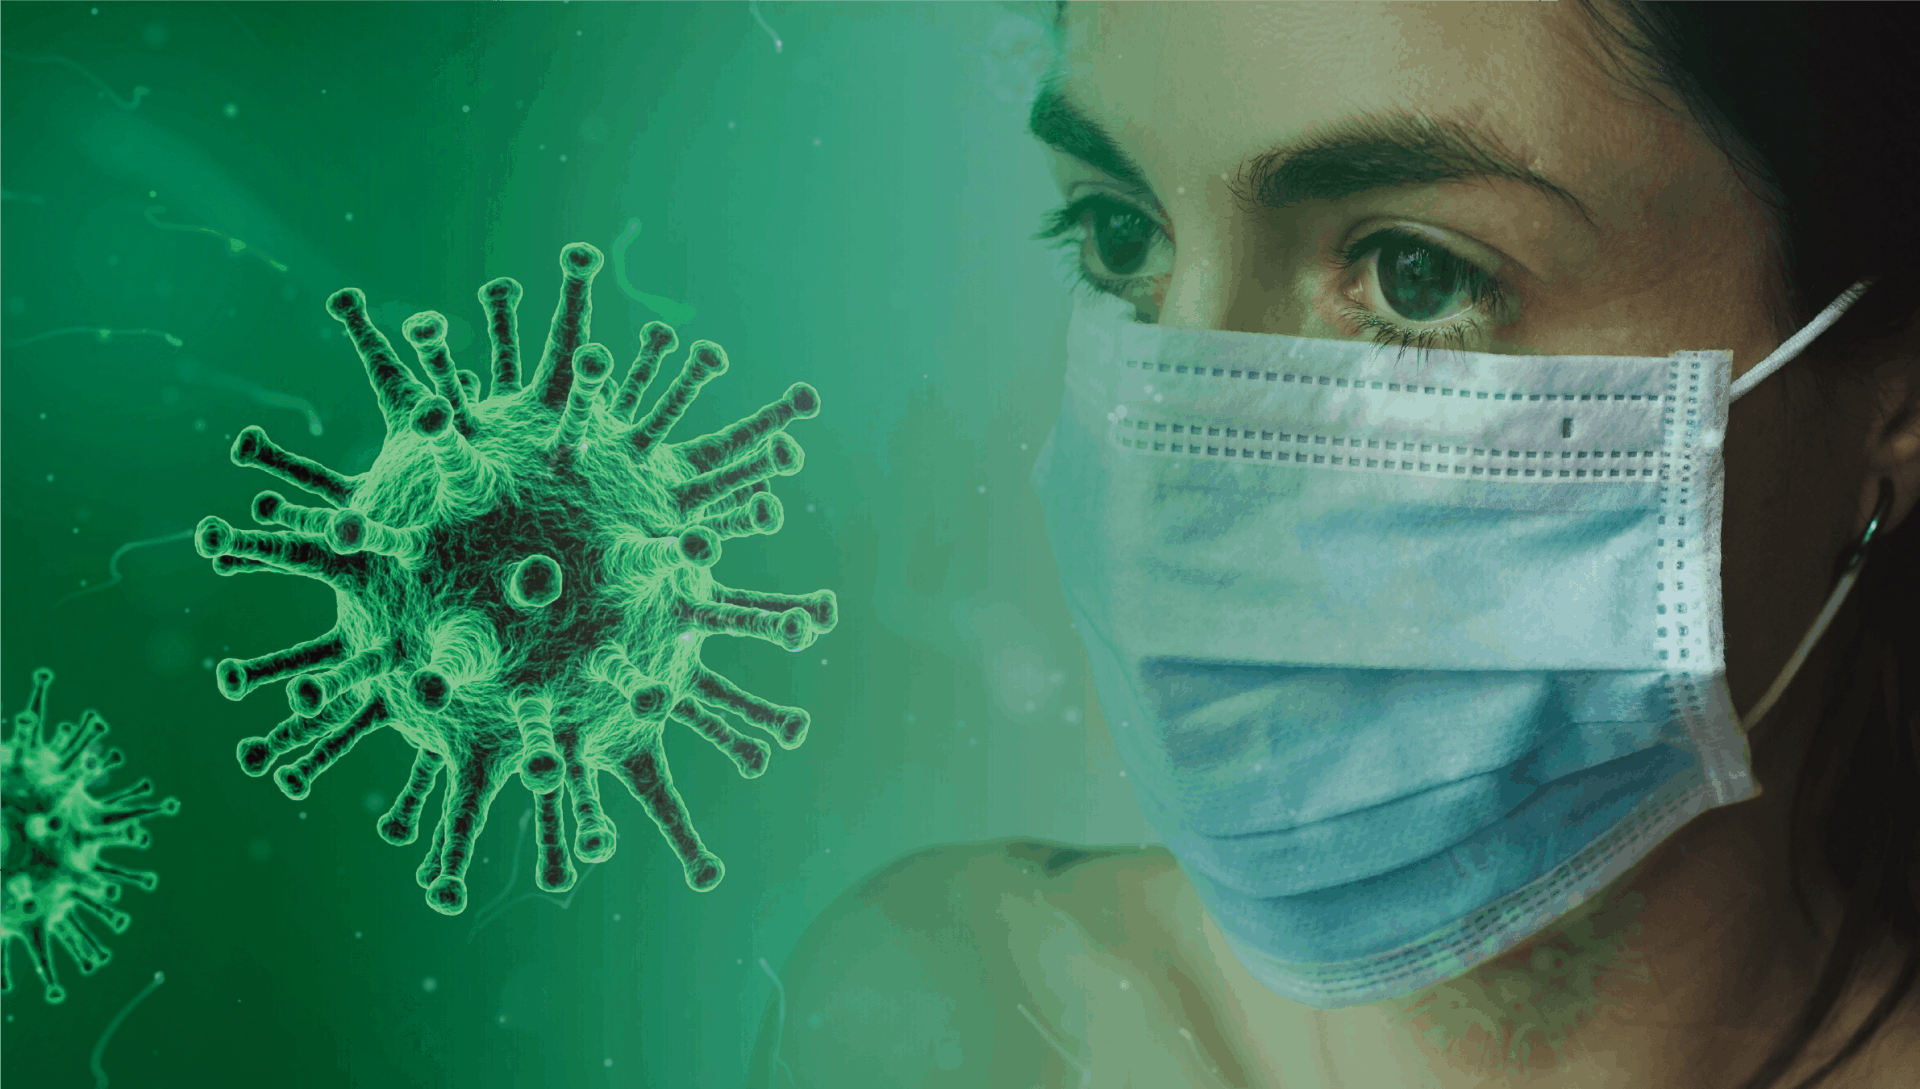 [Anti-Epidemic Battle] 3 Essential Treasures for Epidemic Prevention - improve your immune system